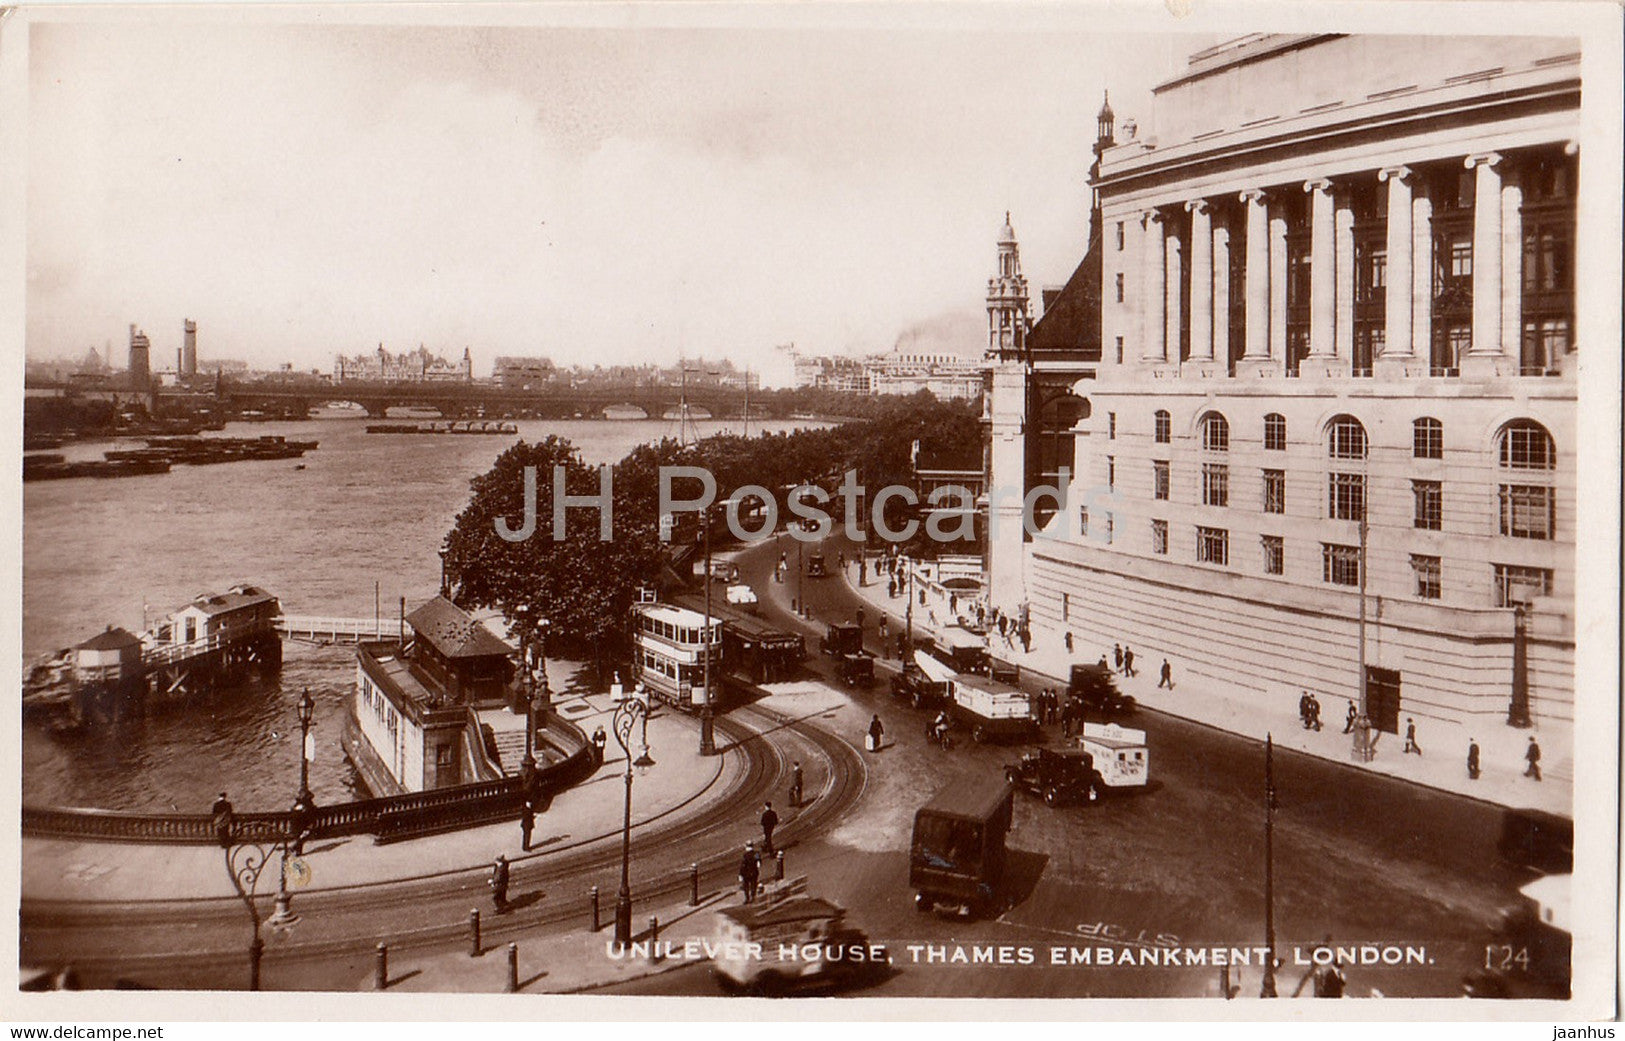 London - Unilever House - Thames Embankment - tram - 124 - old postcard - 1936 - England - United Kingdom - used - JH Postcards